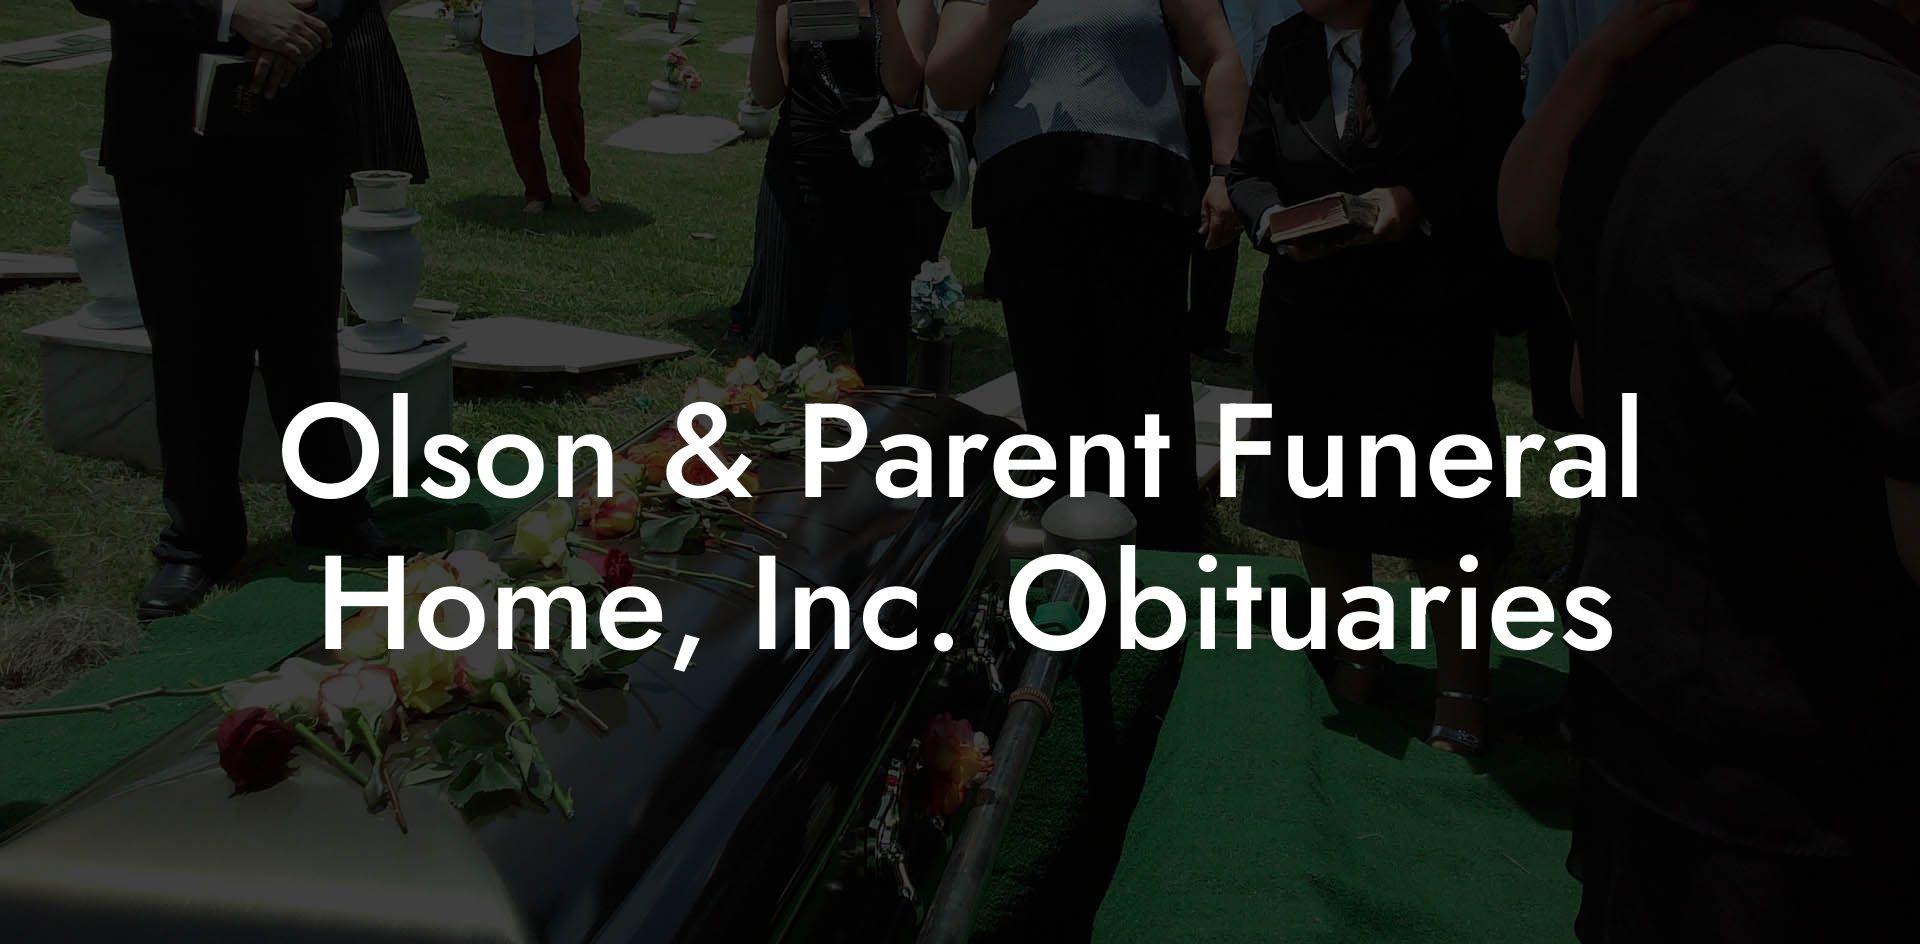 Olson & Parent Funeral Home, Inc. Obituaries